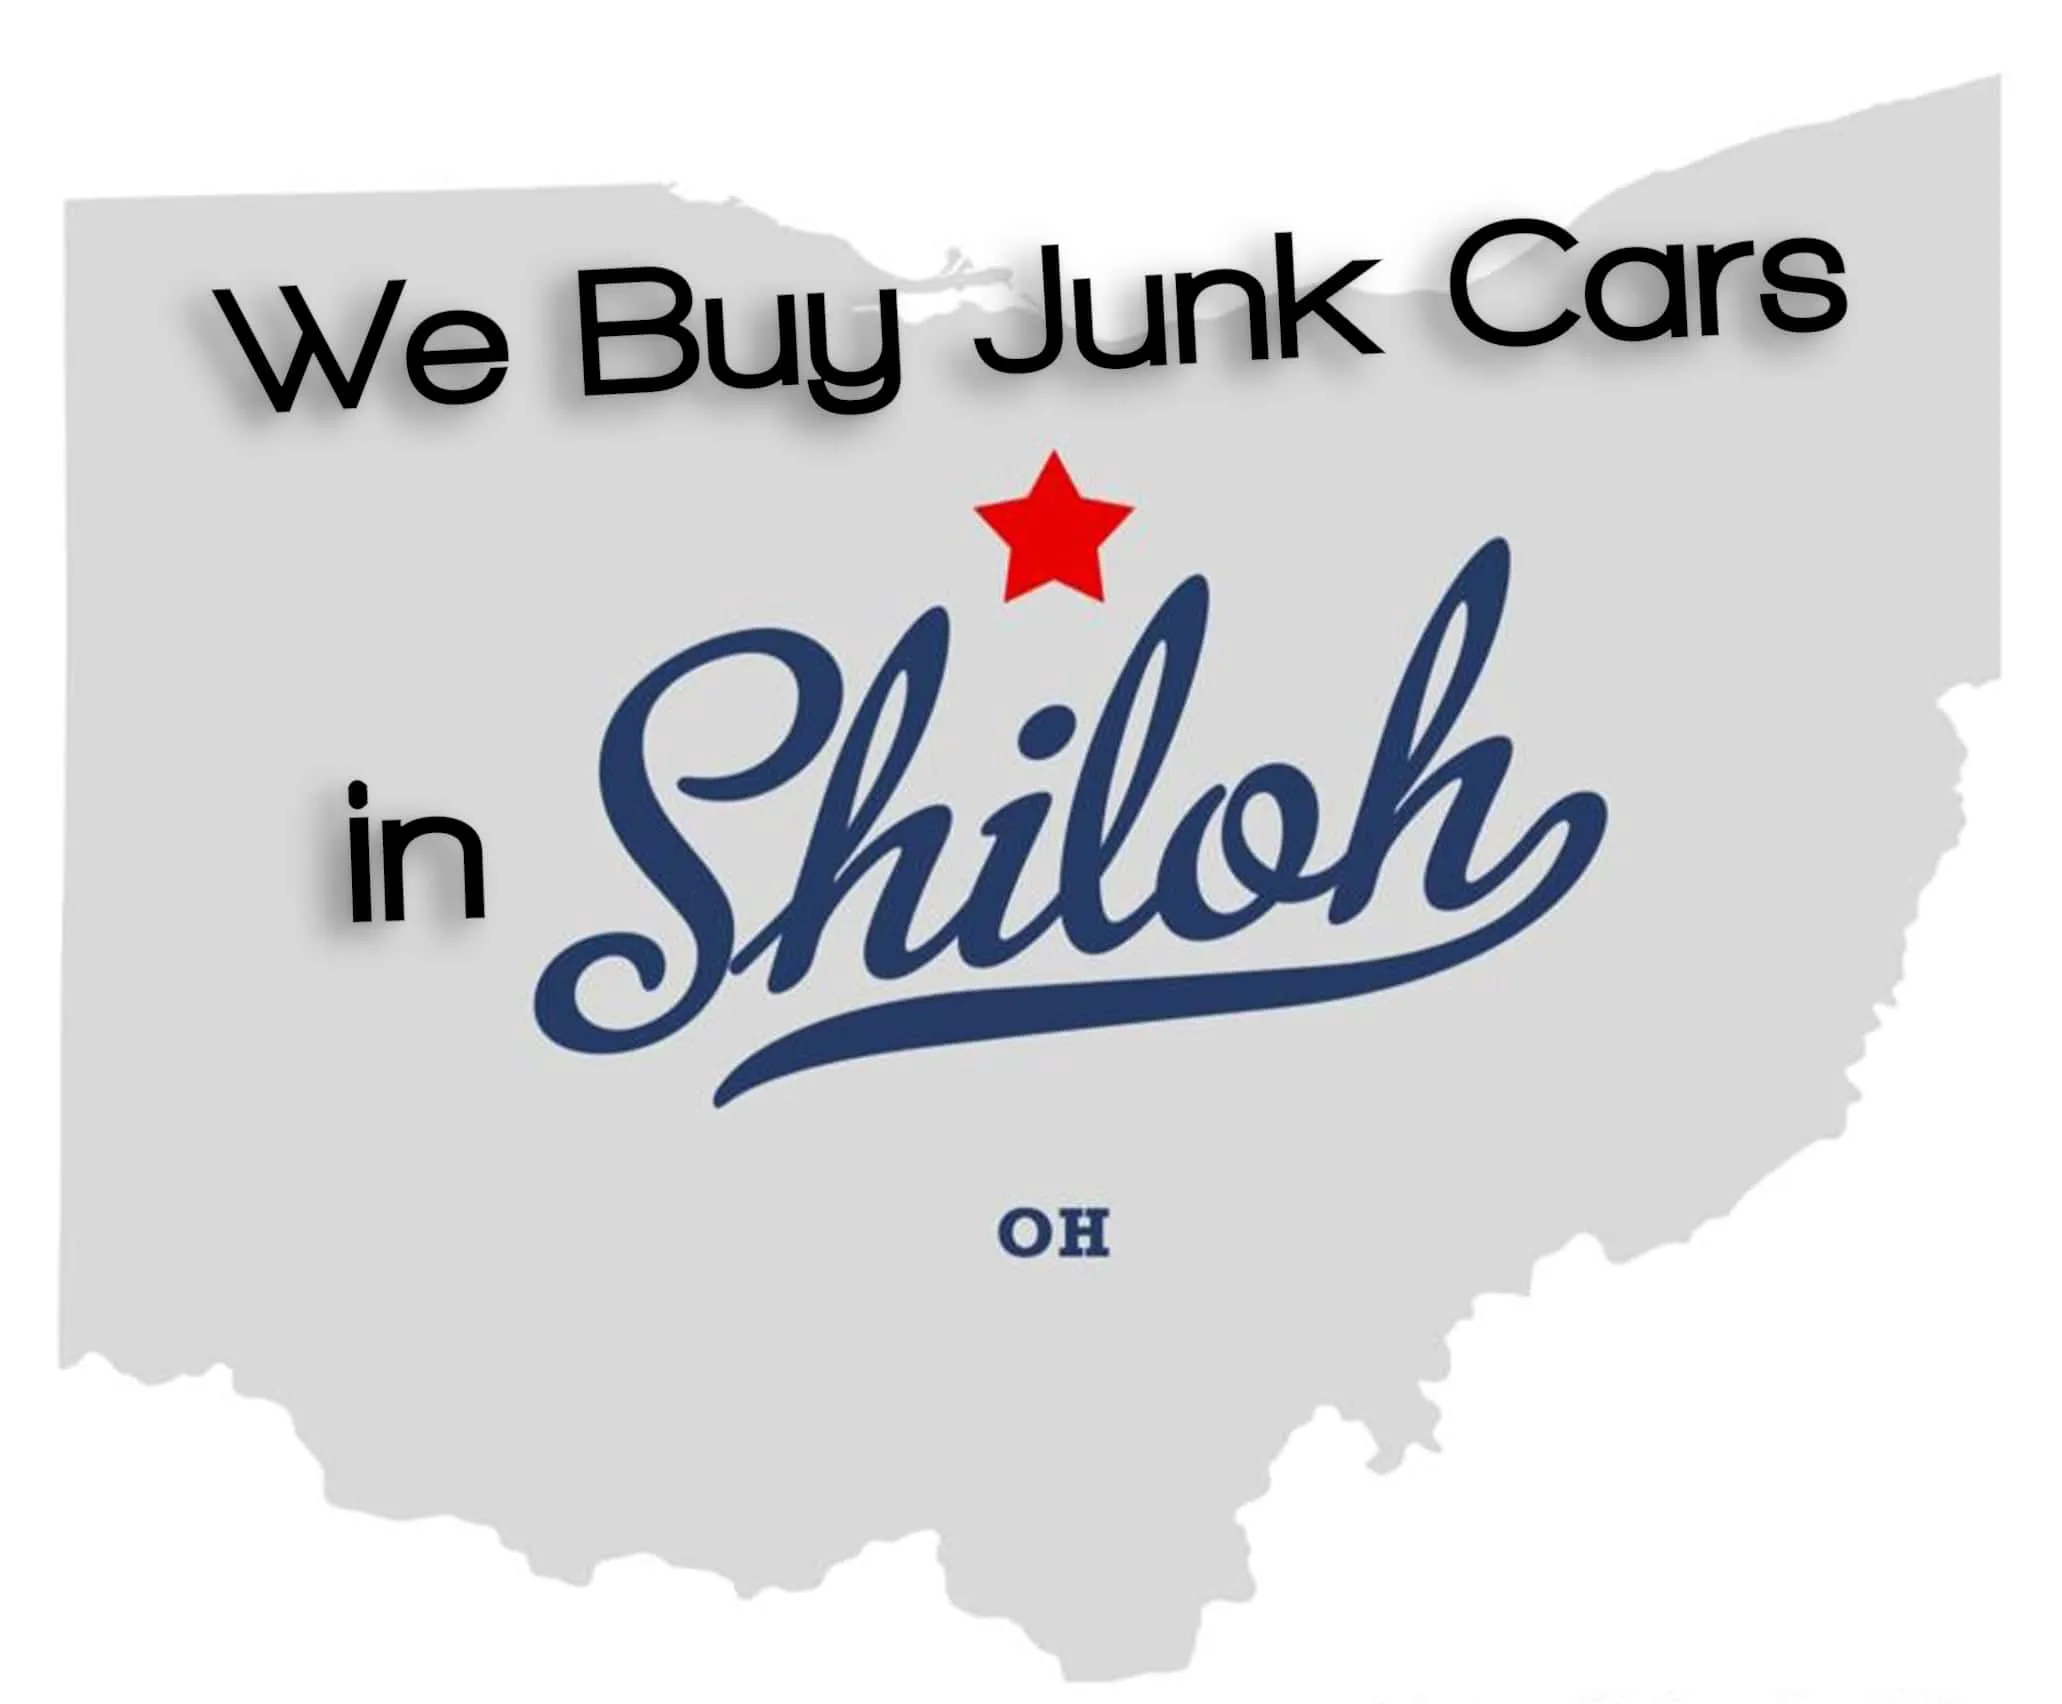 We Buy Junk Cars in Shiloh Ohio. Top Dollar, same day pickup